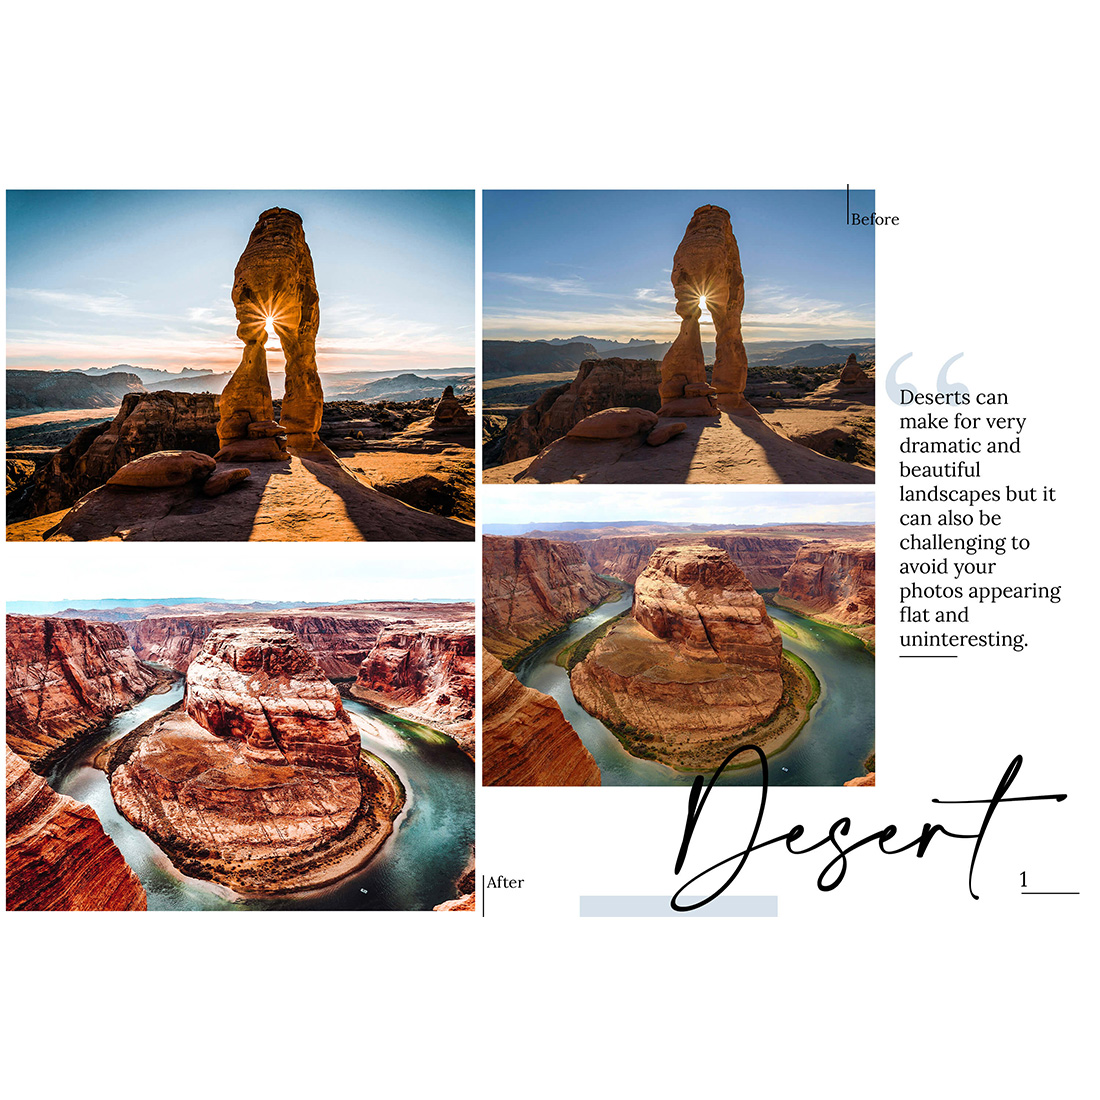 35 Dreamland Lightroom Presets, Landscape Mobile Preset, Scenery Desktop, Lifestyle Portrait Theme Instagram LR Filter DNG Nature Mountain preview image.